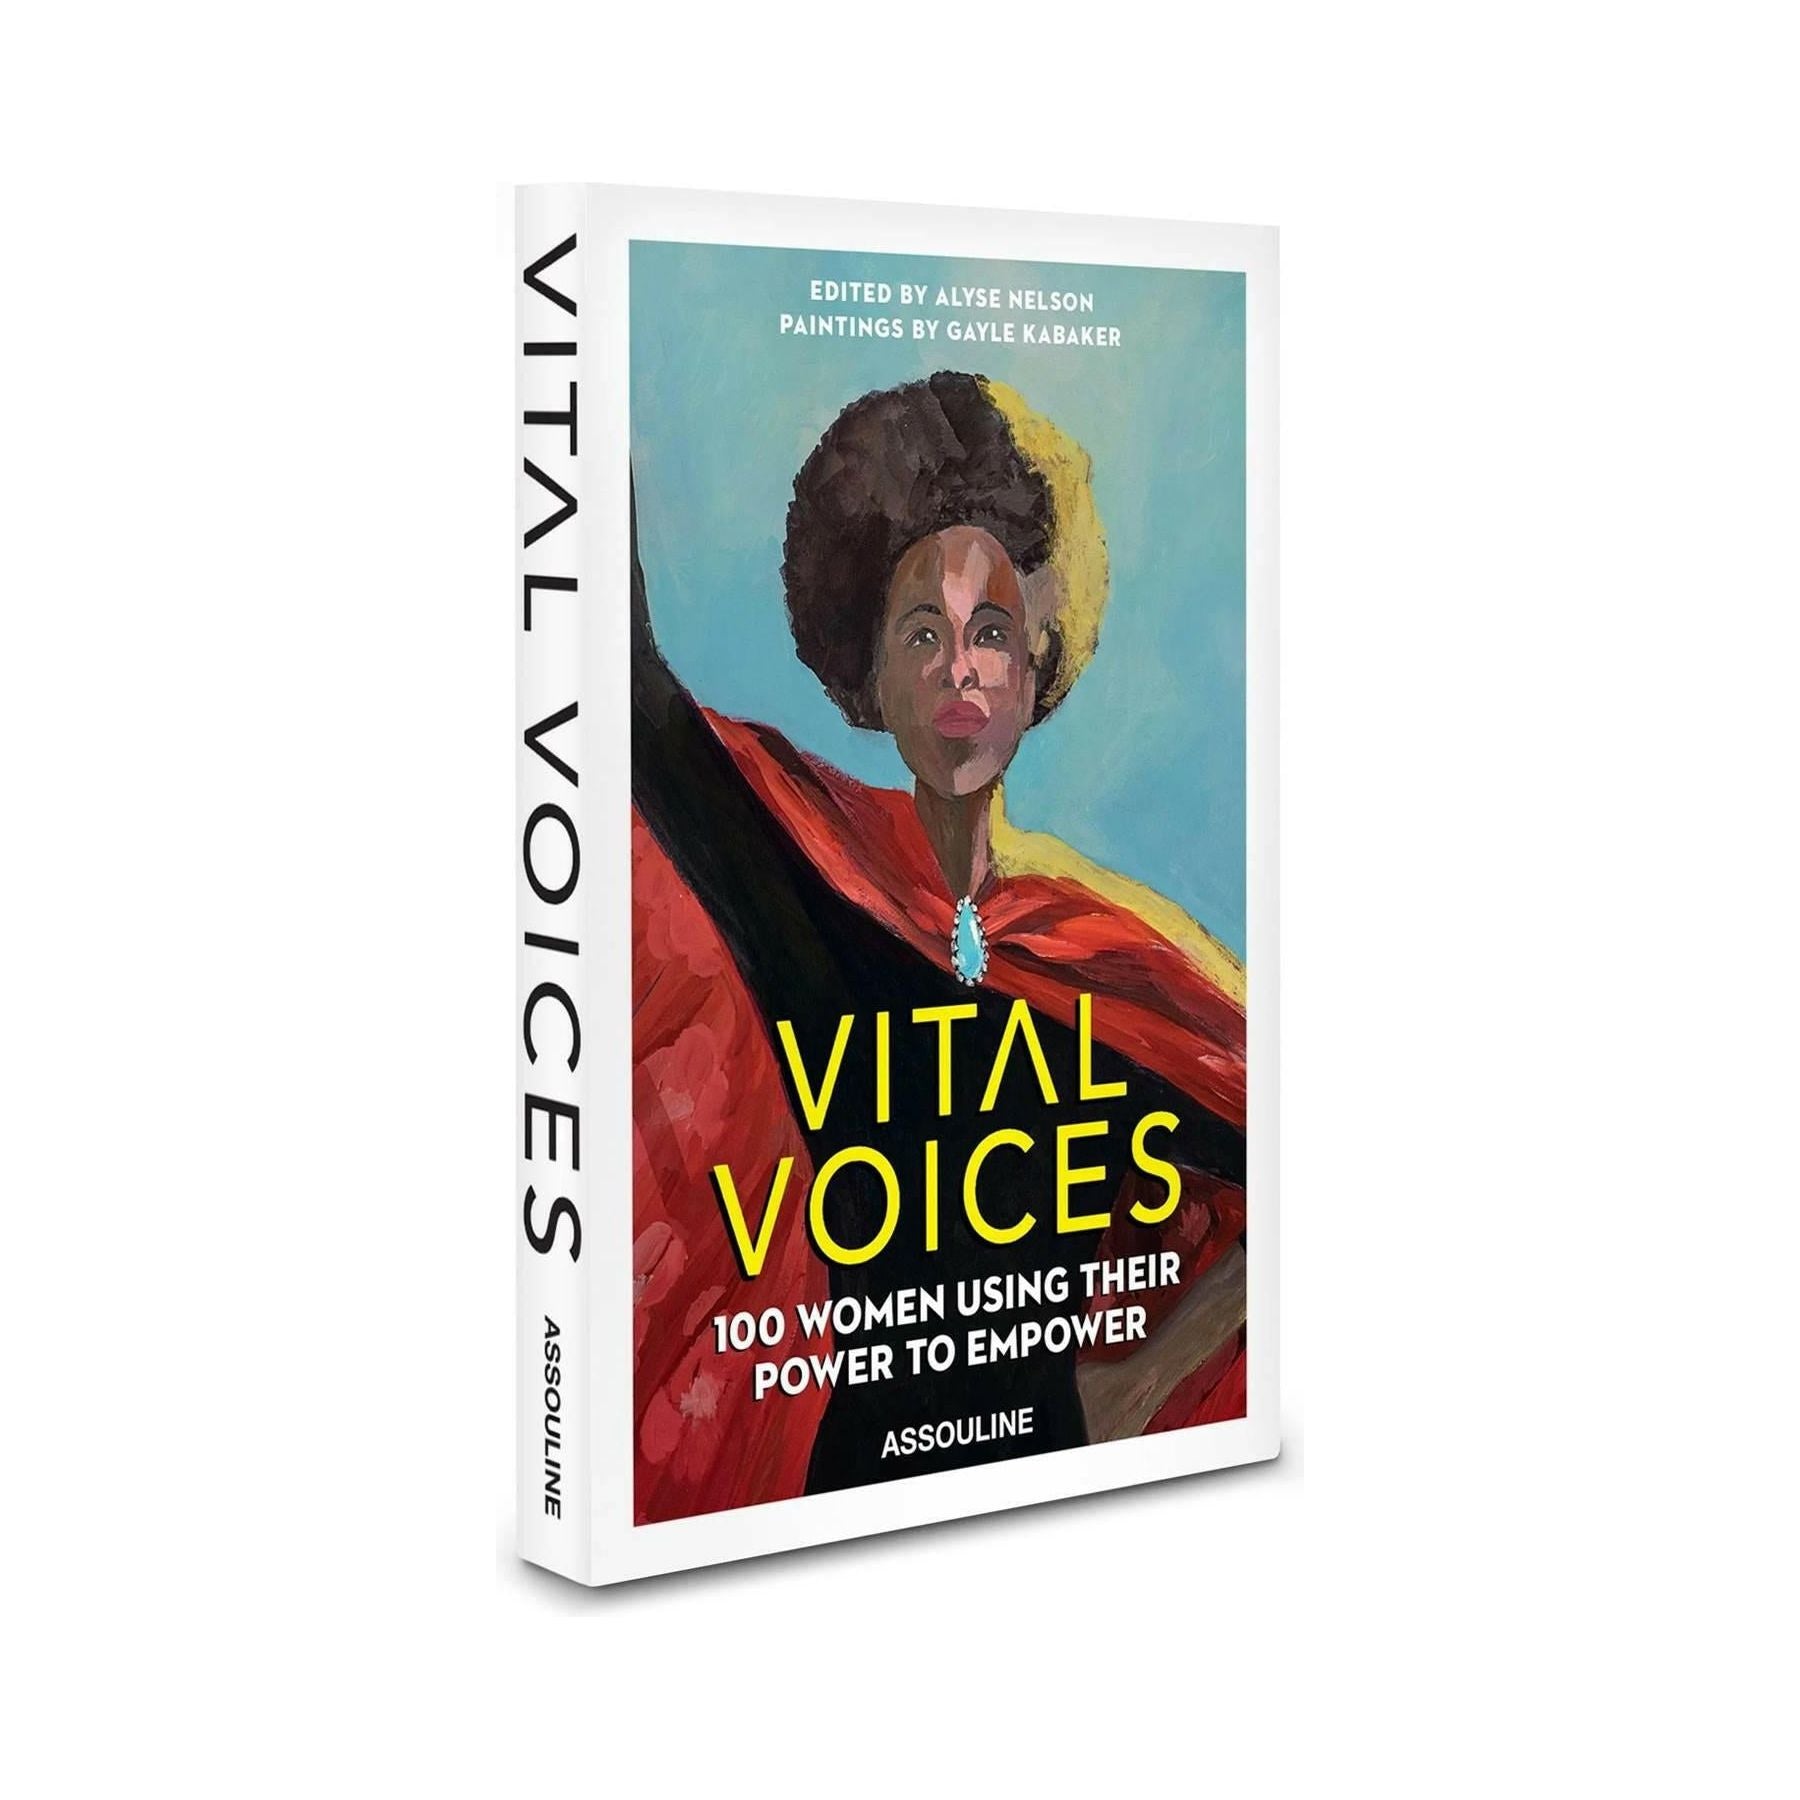 Vital Voices: 100 Women Using Their Power To Empower ASSOULINE JOHN JULIA.